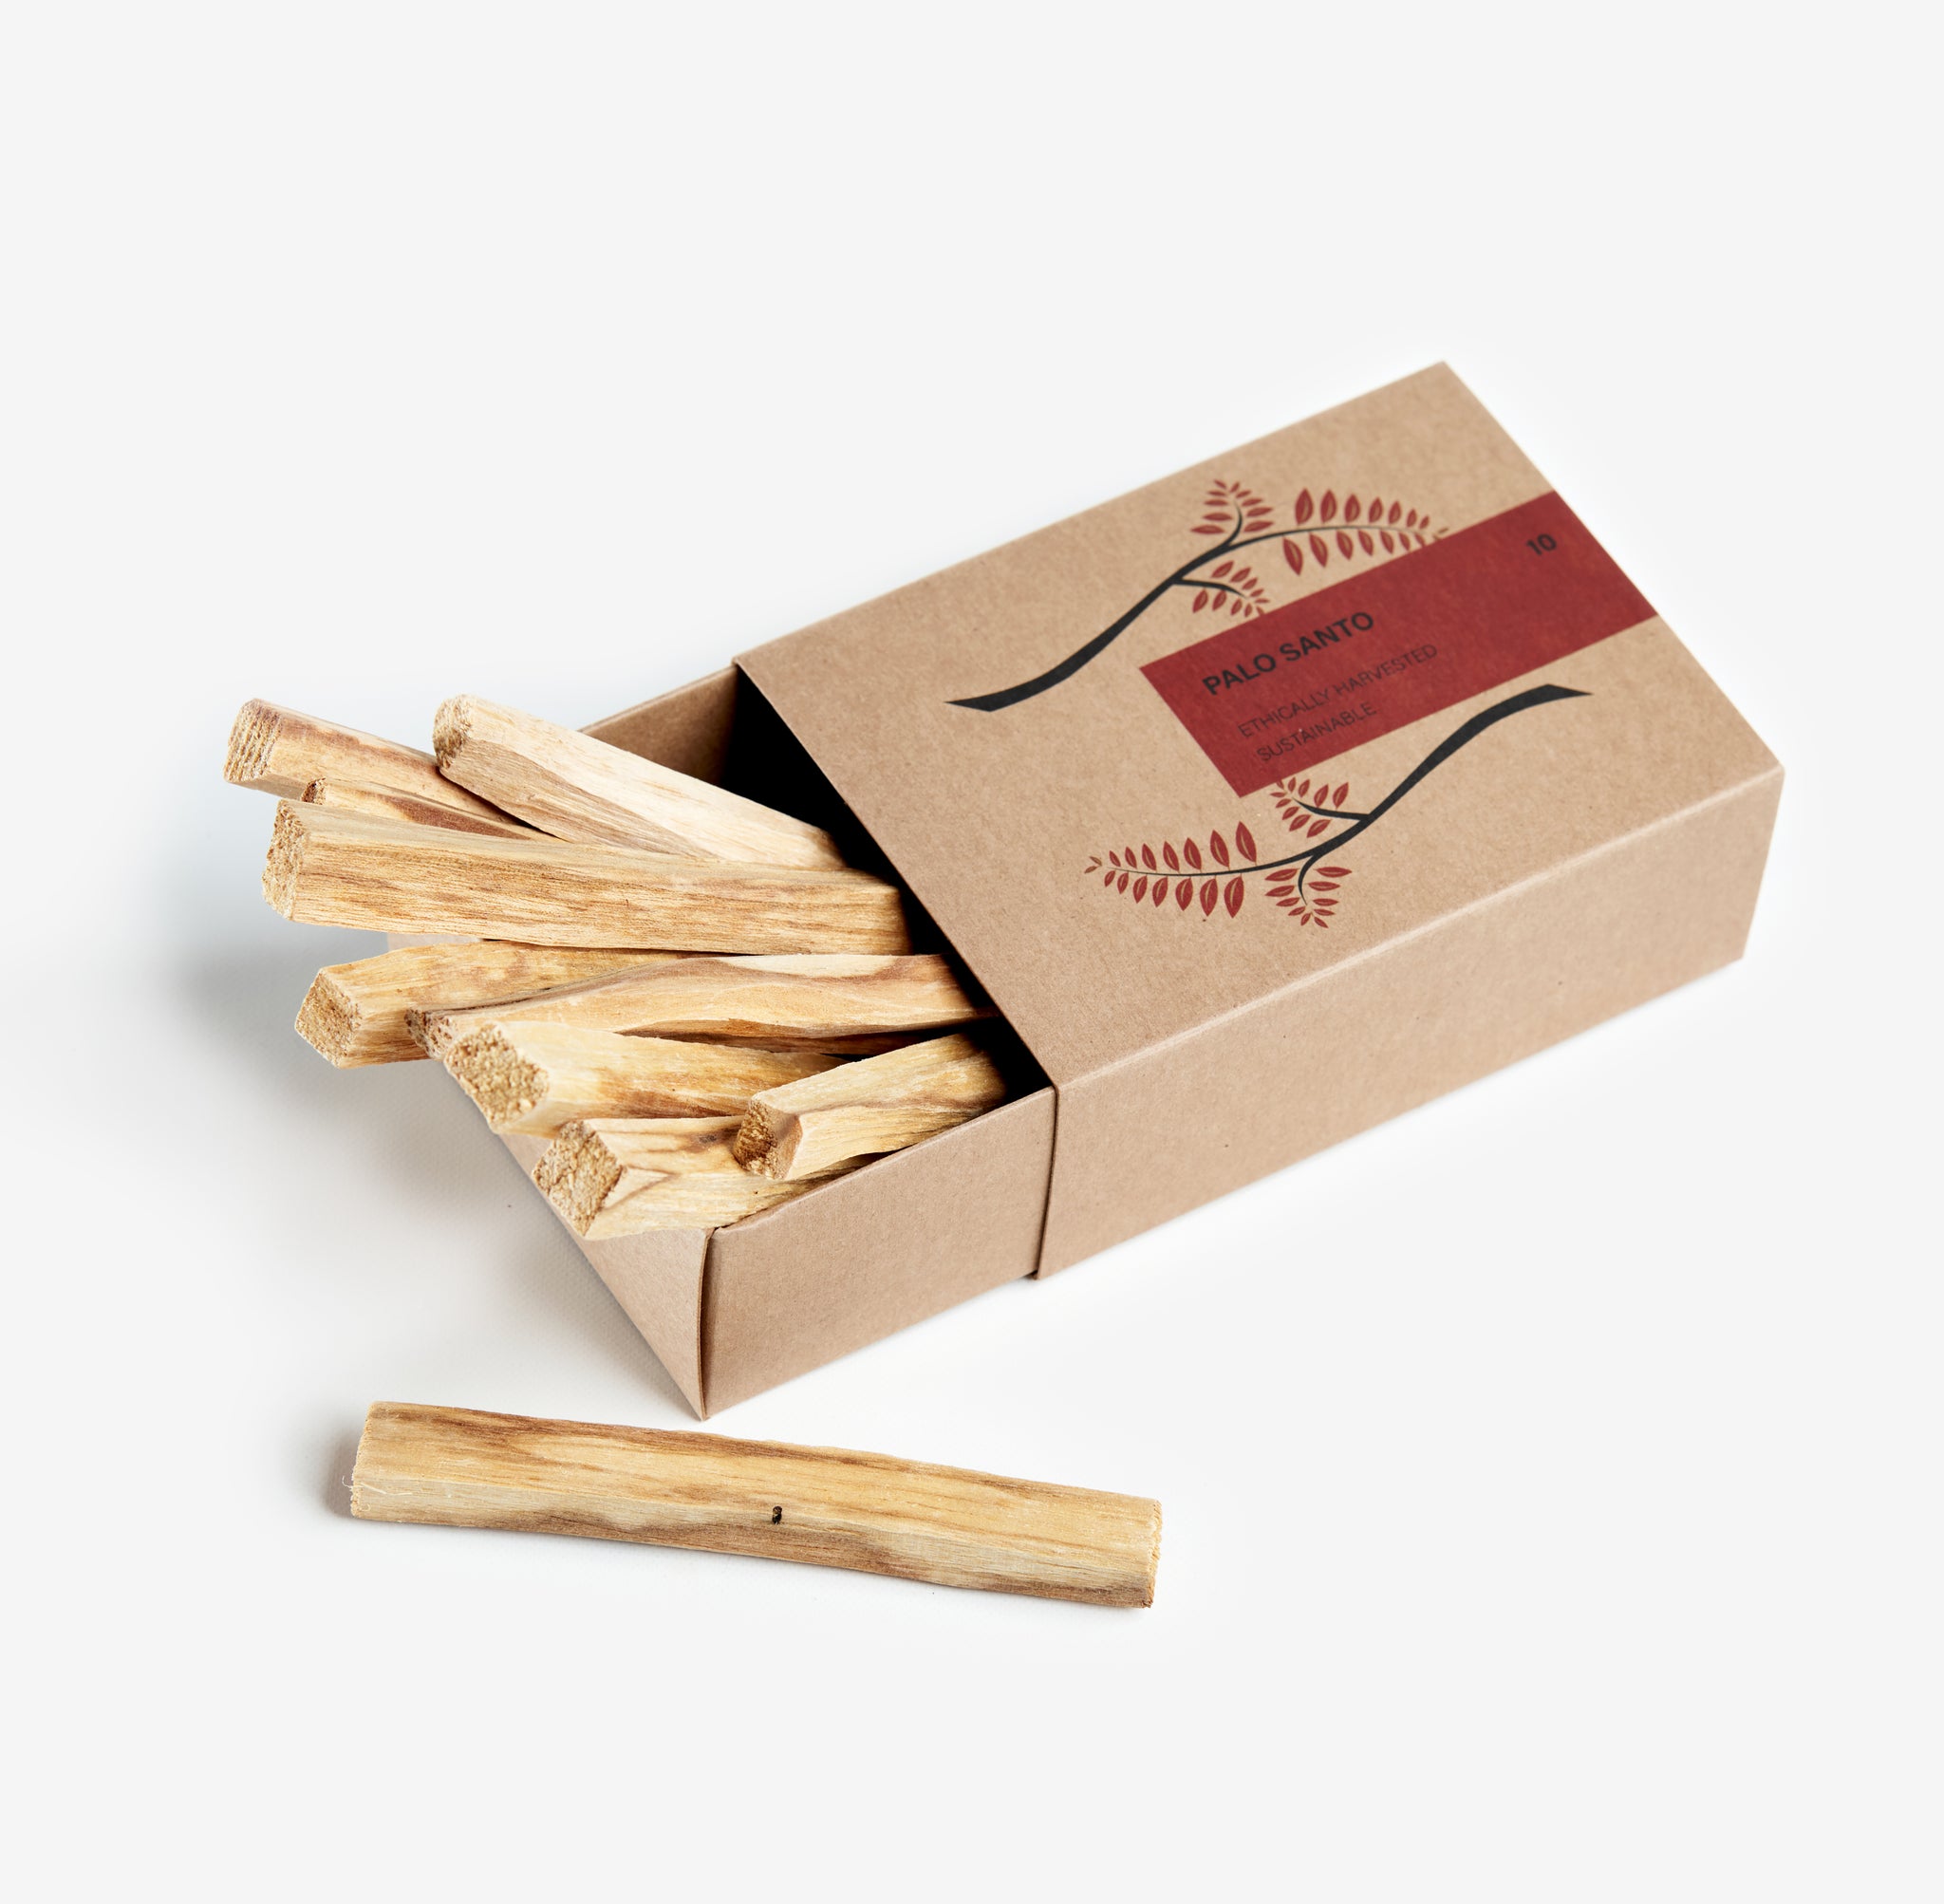 Palo Santo Wood Sticks 10 Pack